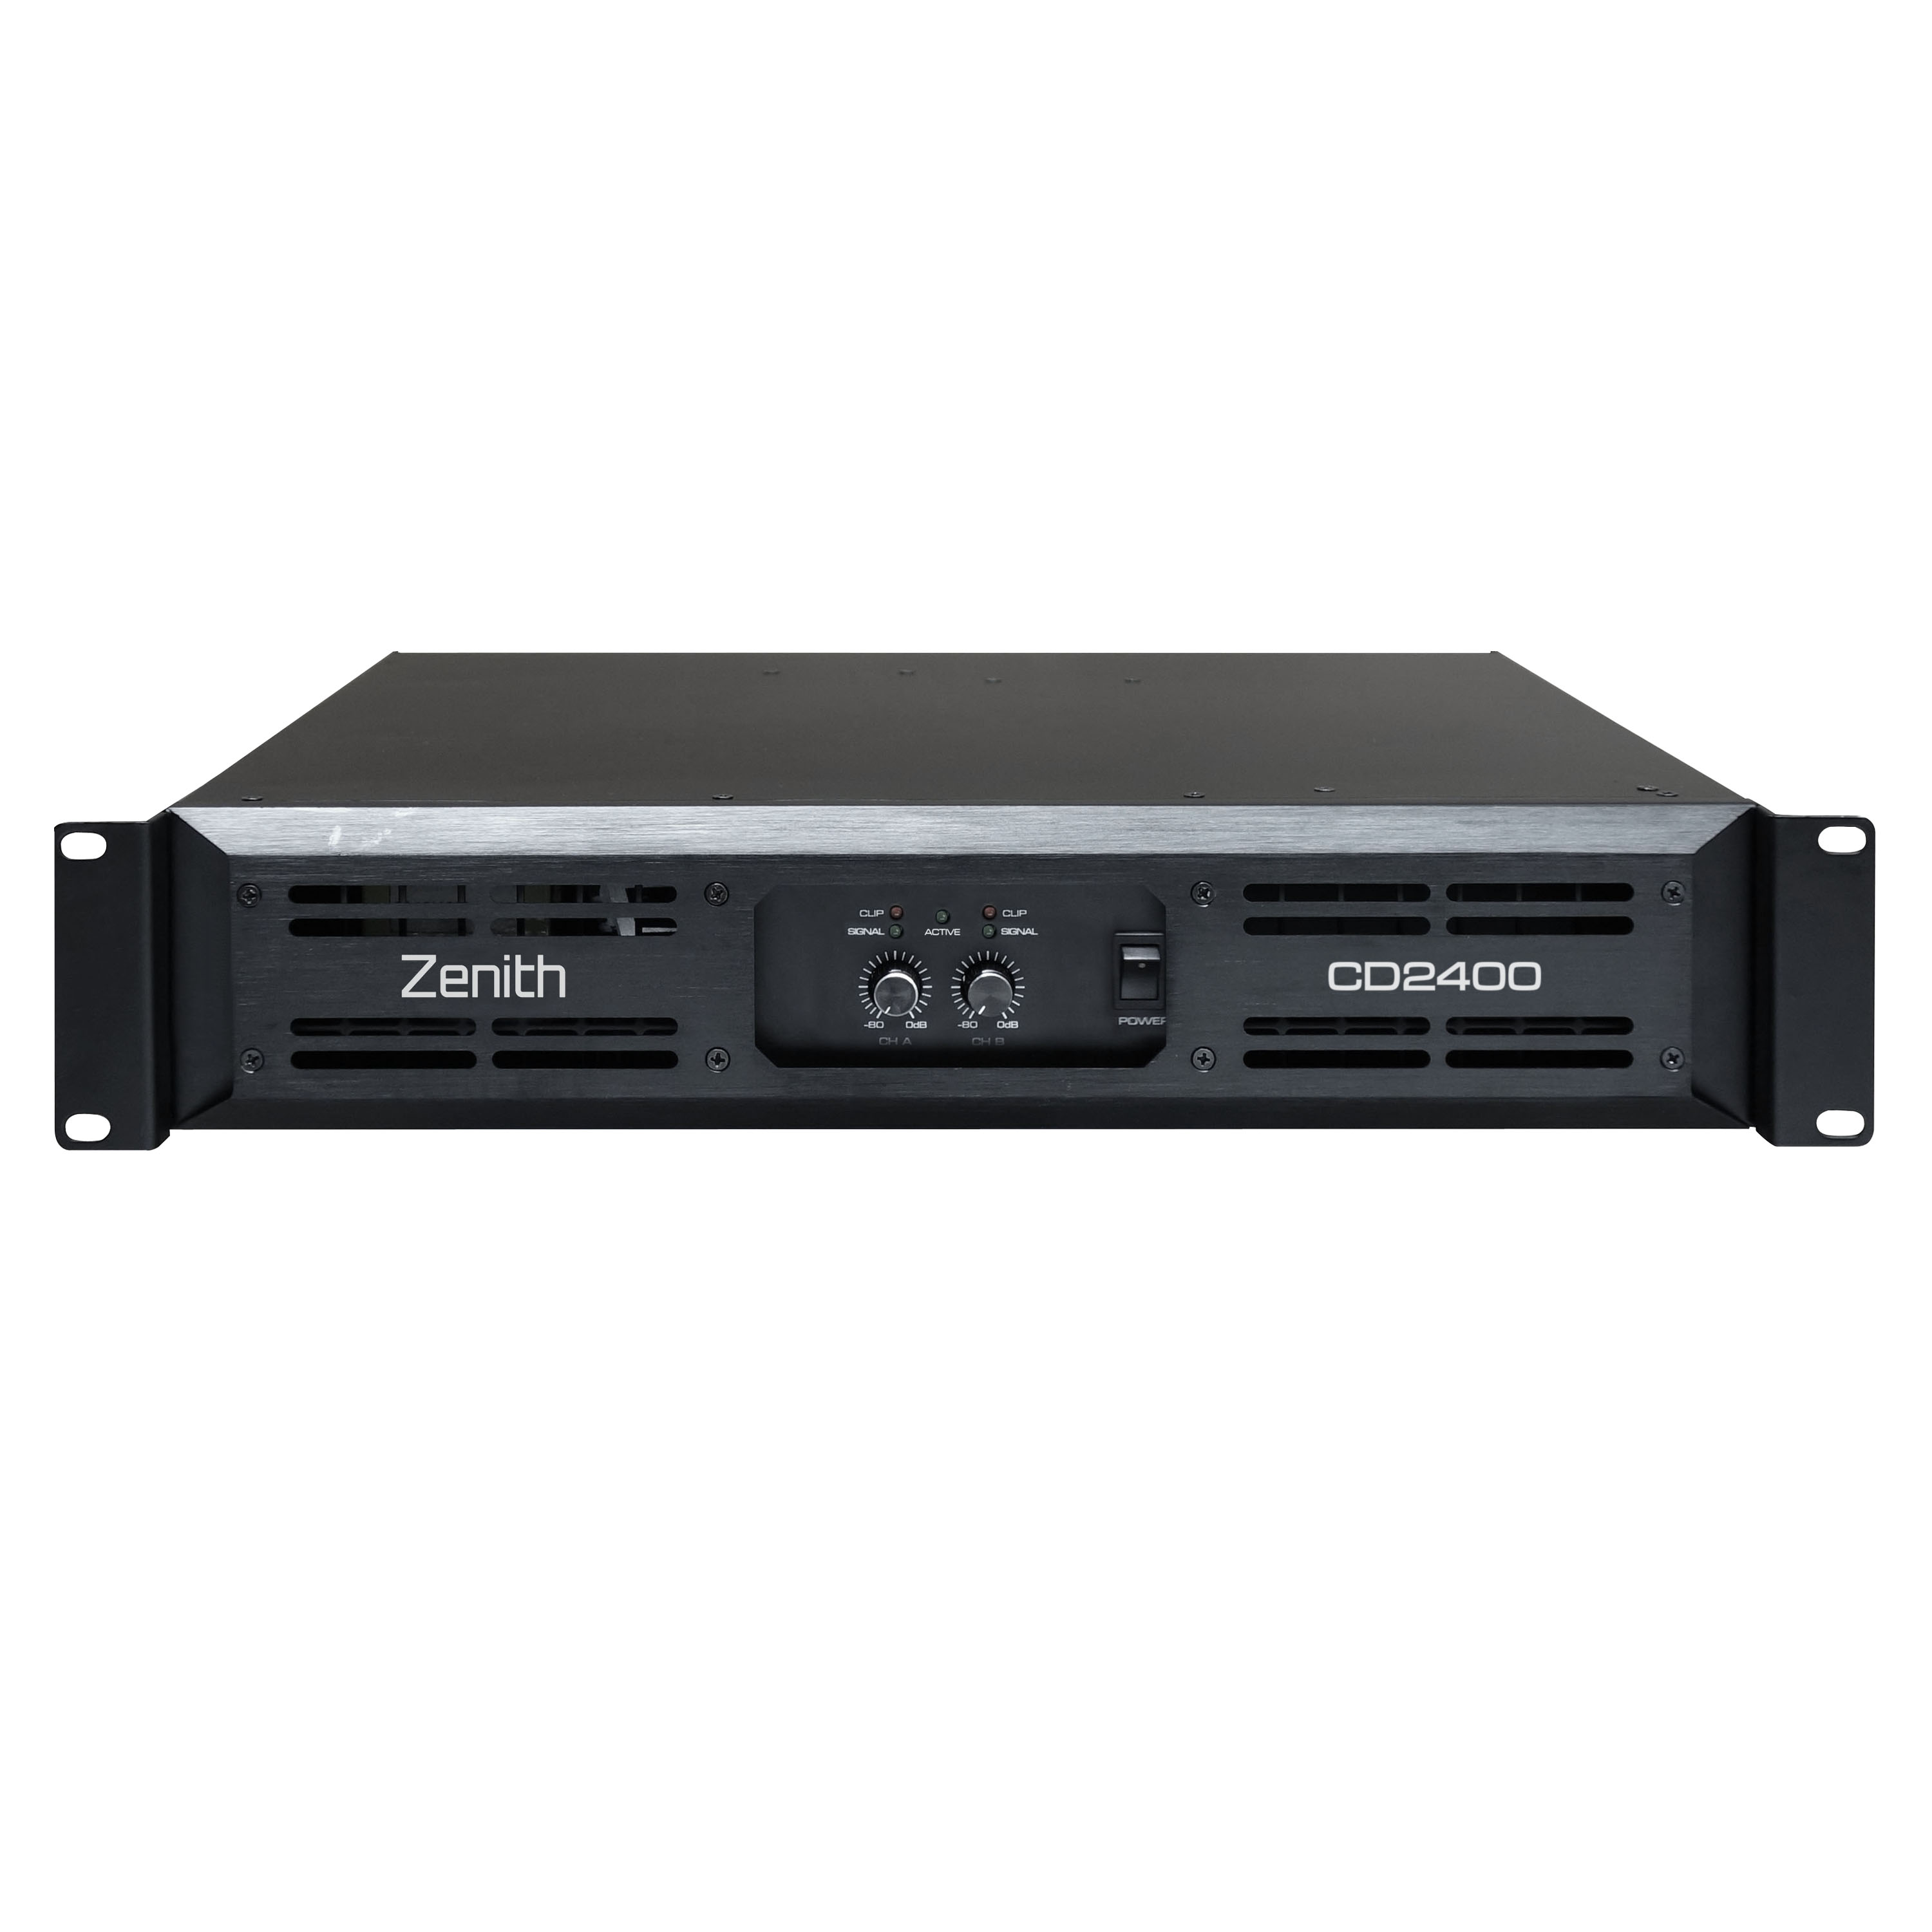 Zenith CD2400 Amplifier